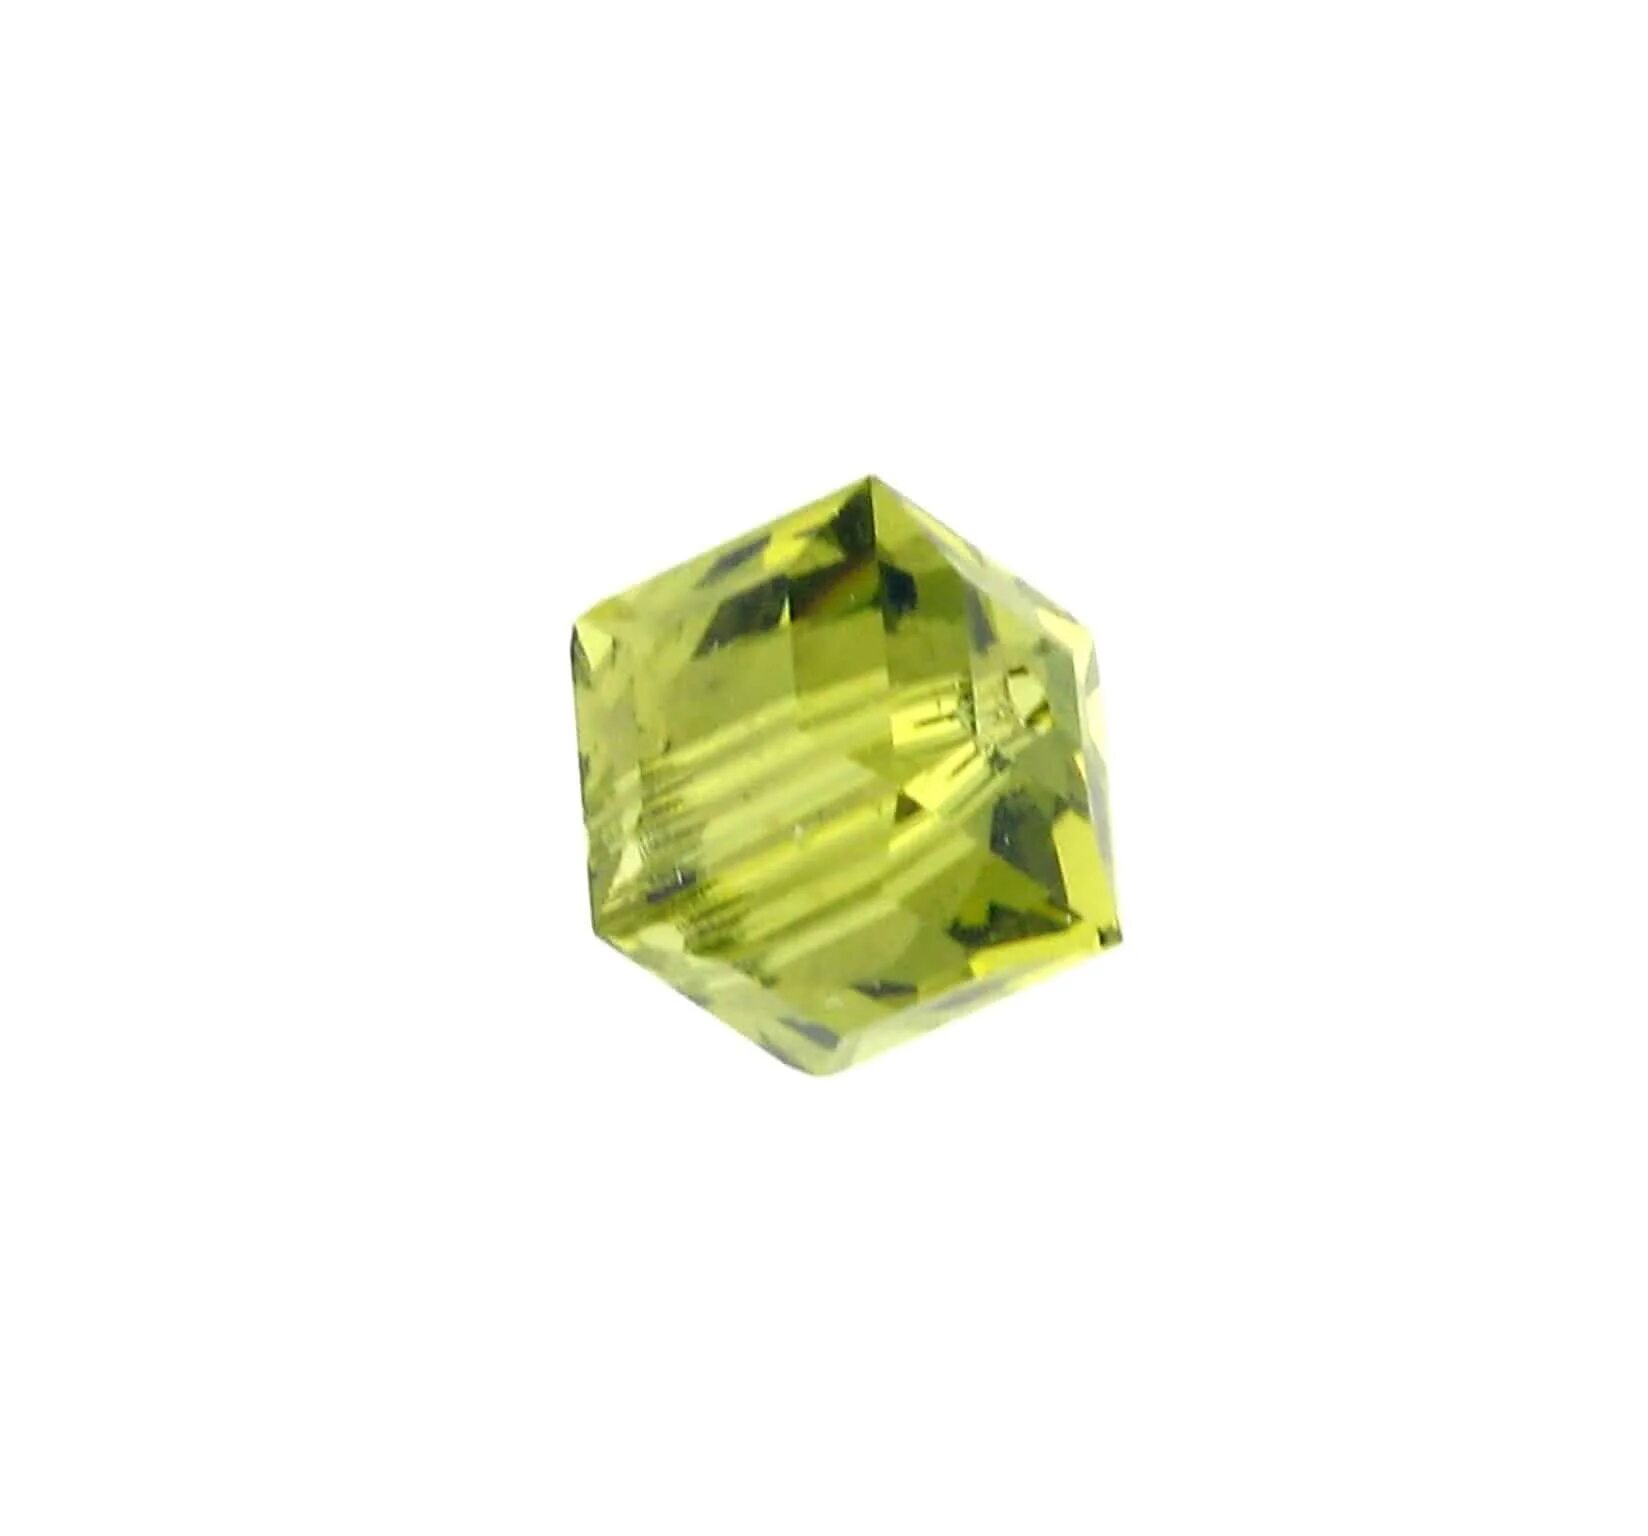 Swarovski Cubes 5601 4mm Alexandrite. Swarovski Cube 4 mm old Gold. Cube Crystal Cube. Кубики Сваровски 5601 4 мм поштучно. Кристалл хаки